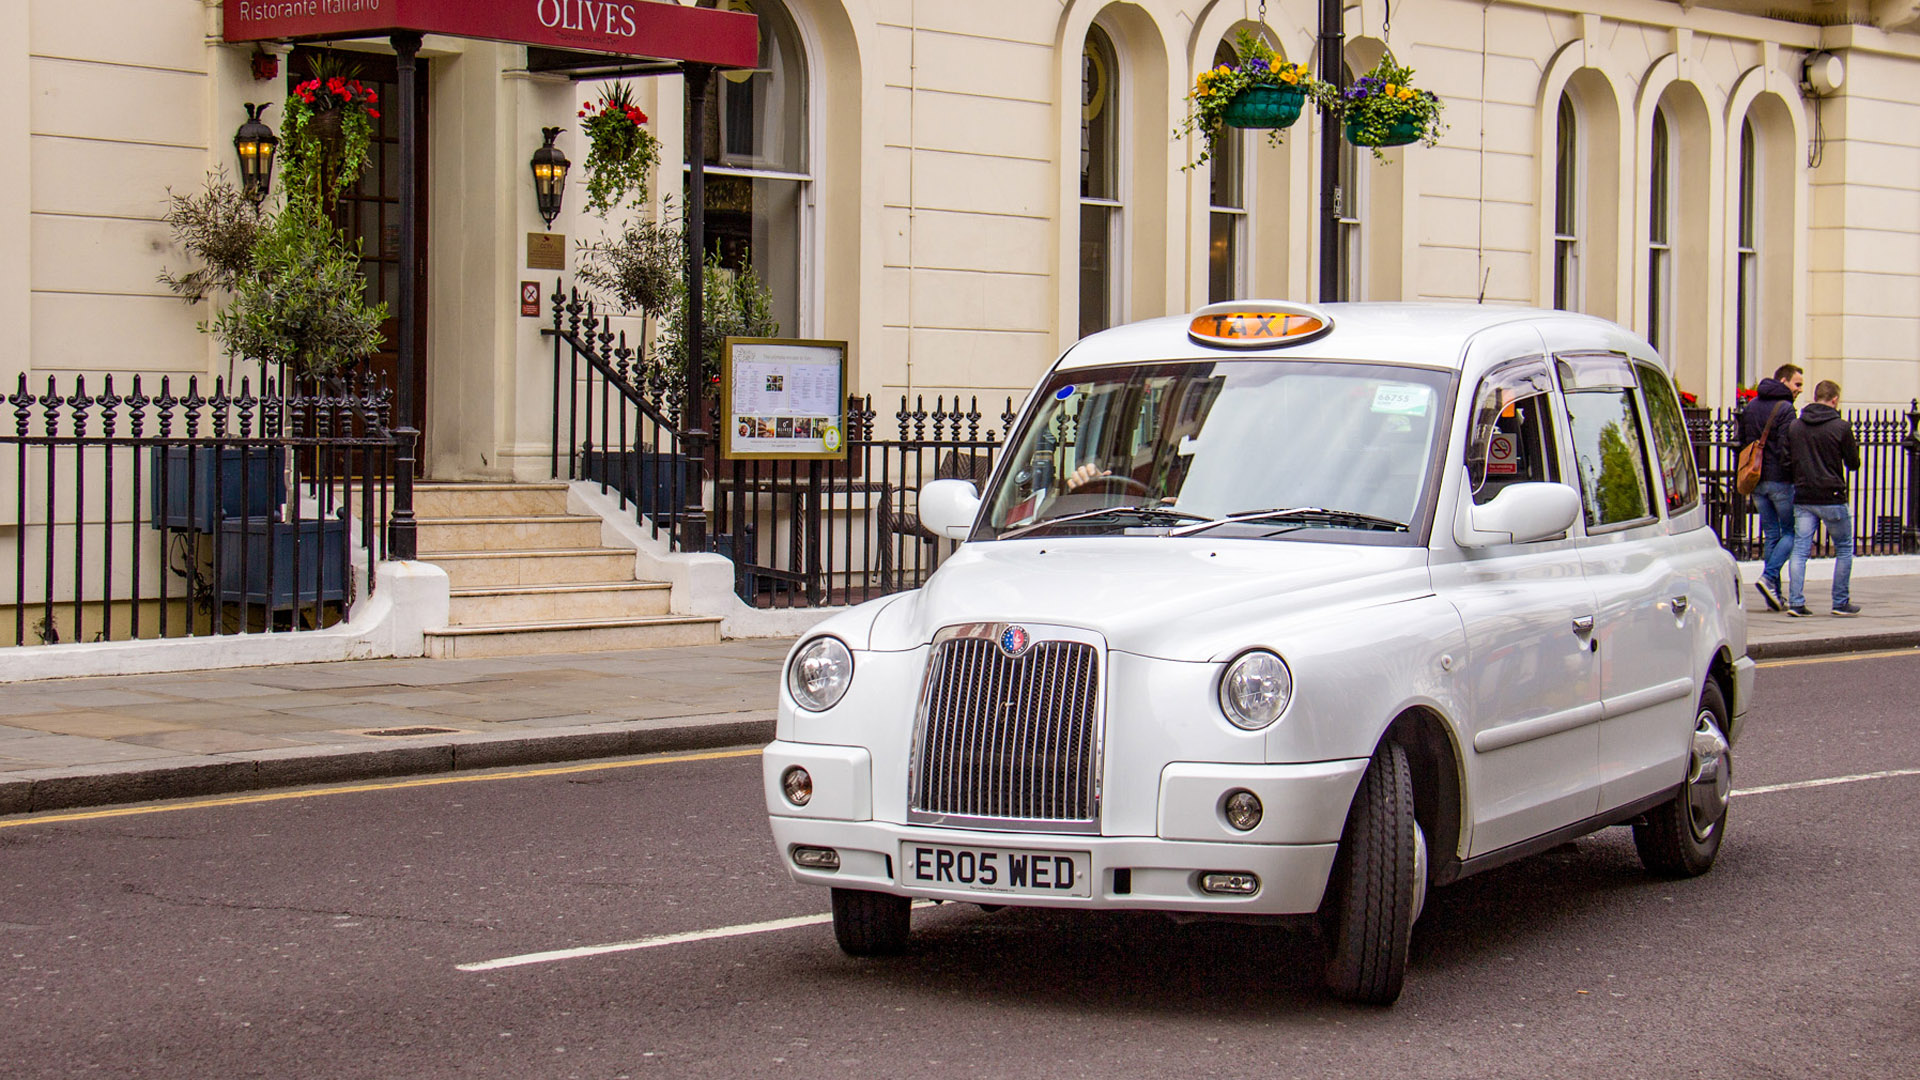 Táxi em Londres